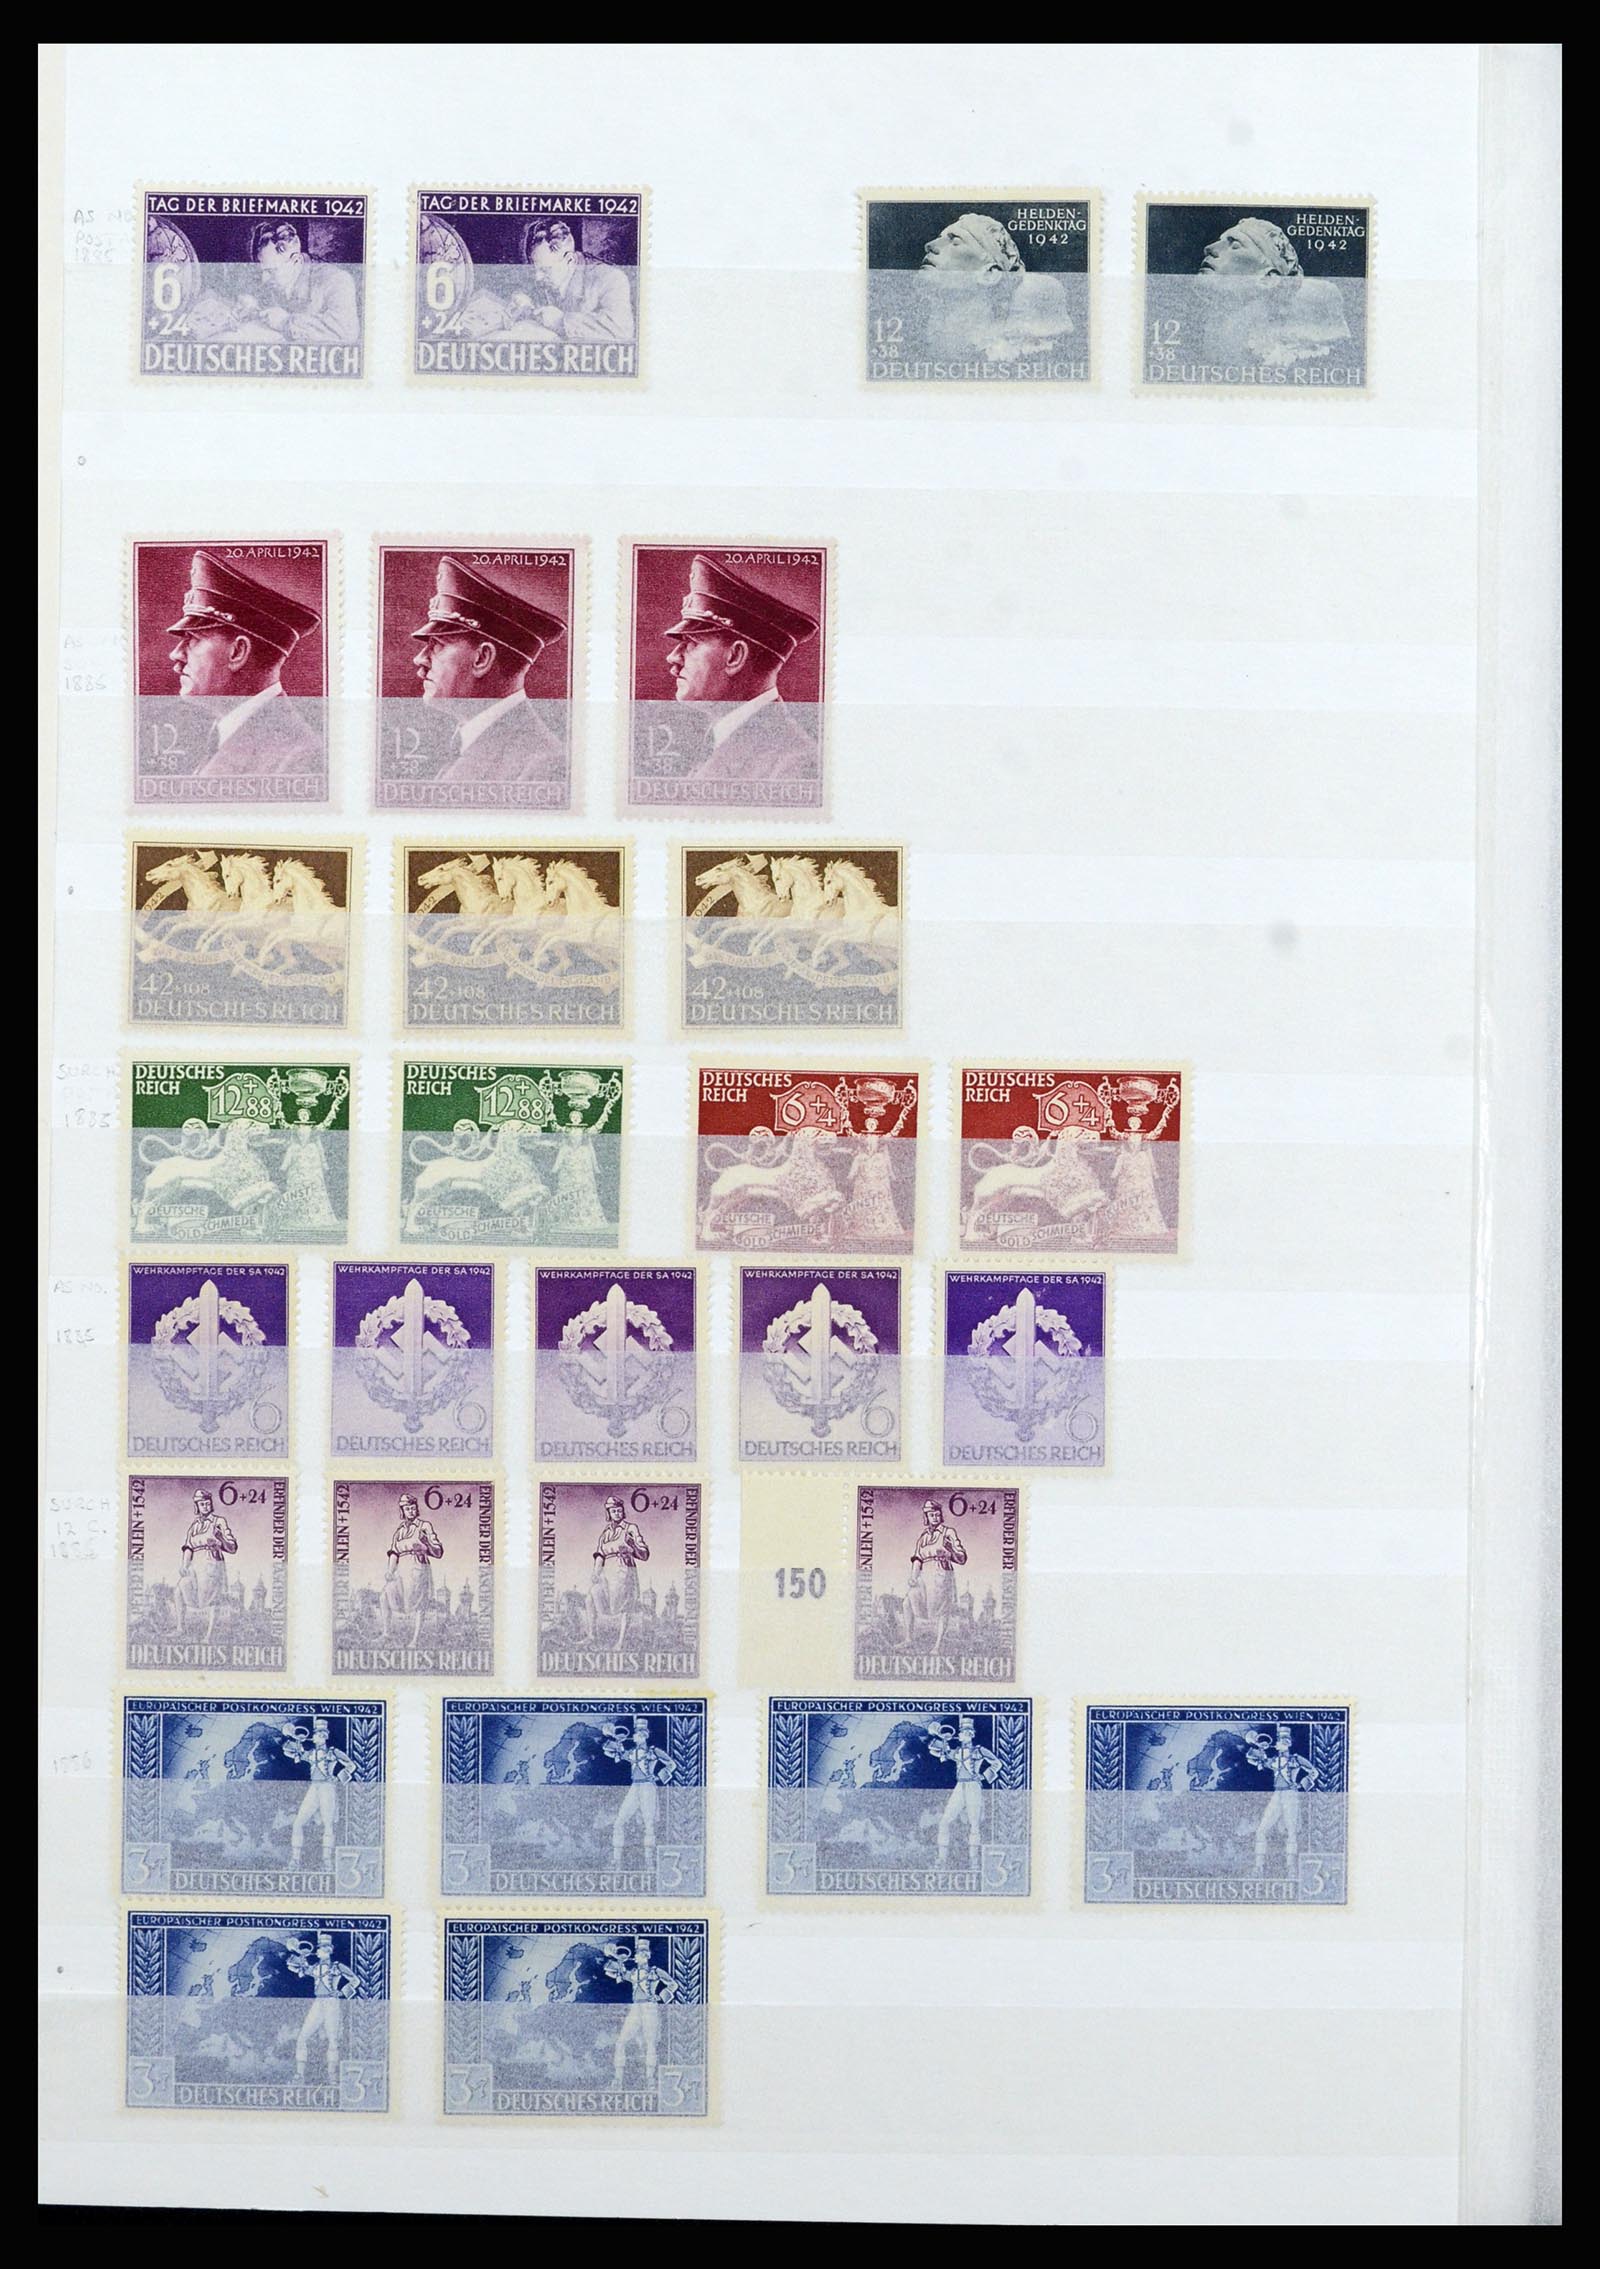 37103 022 - Stamp collection 37103 German Reich 1880-1945.